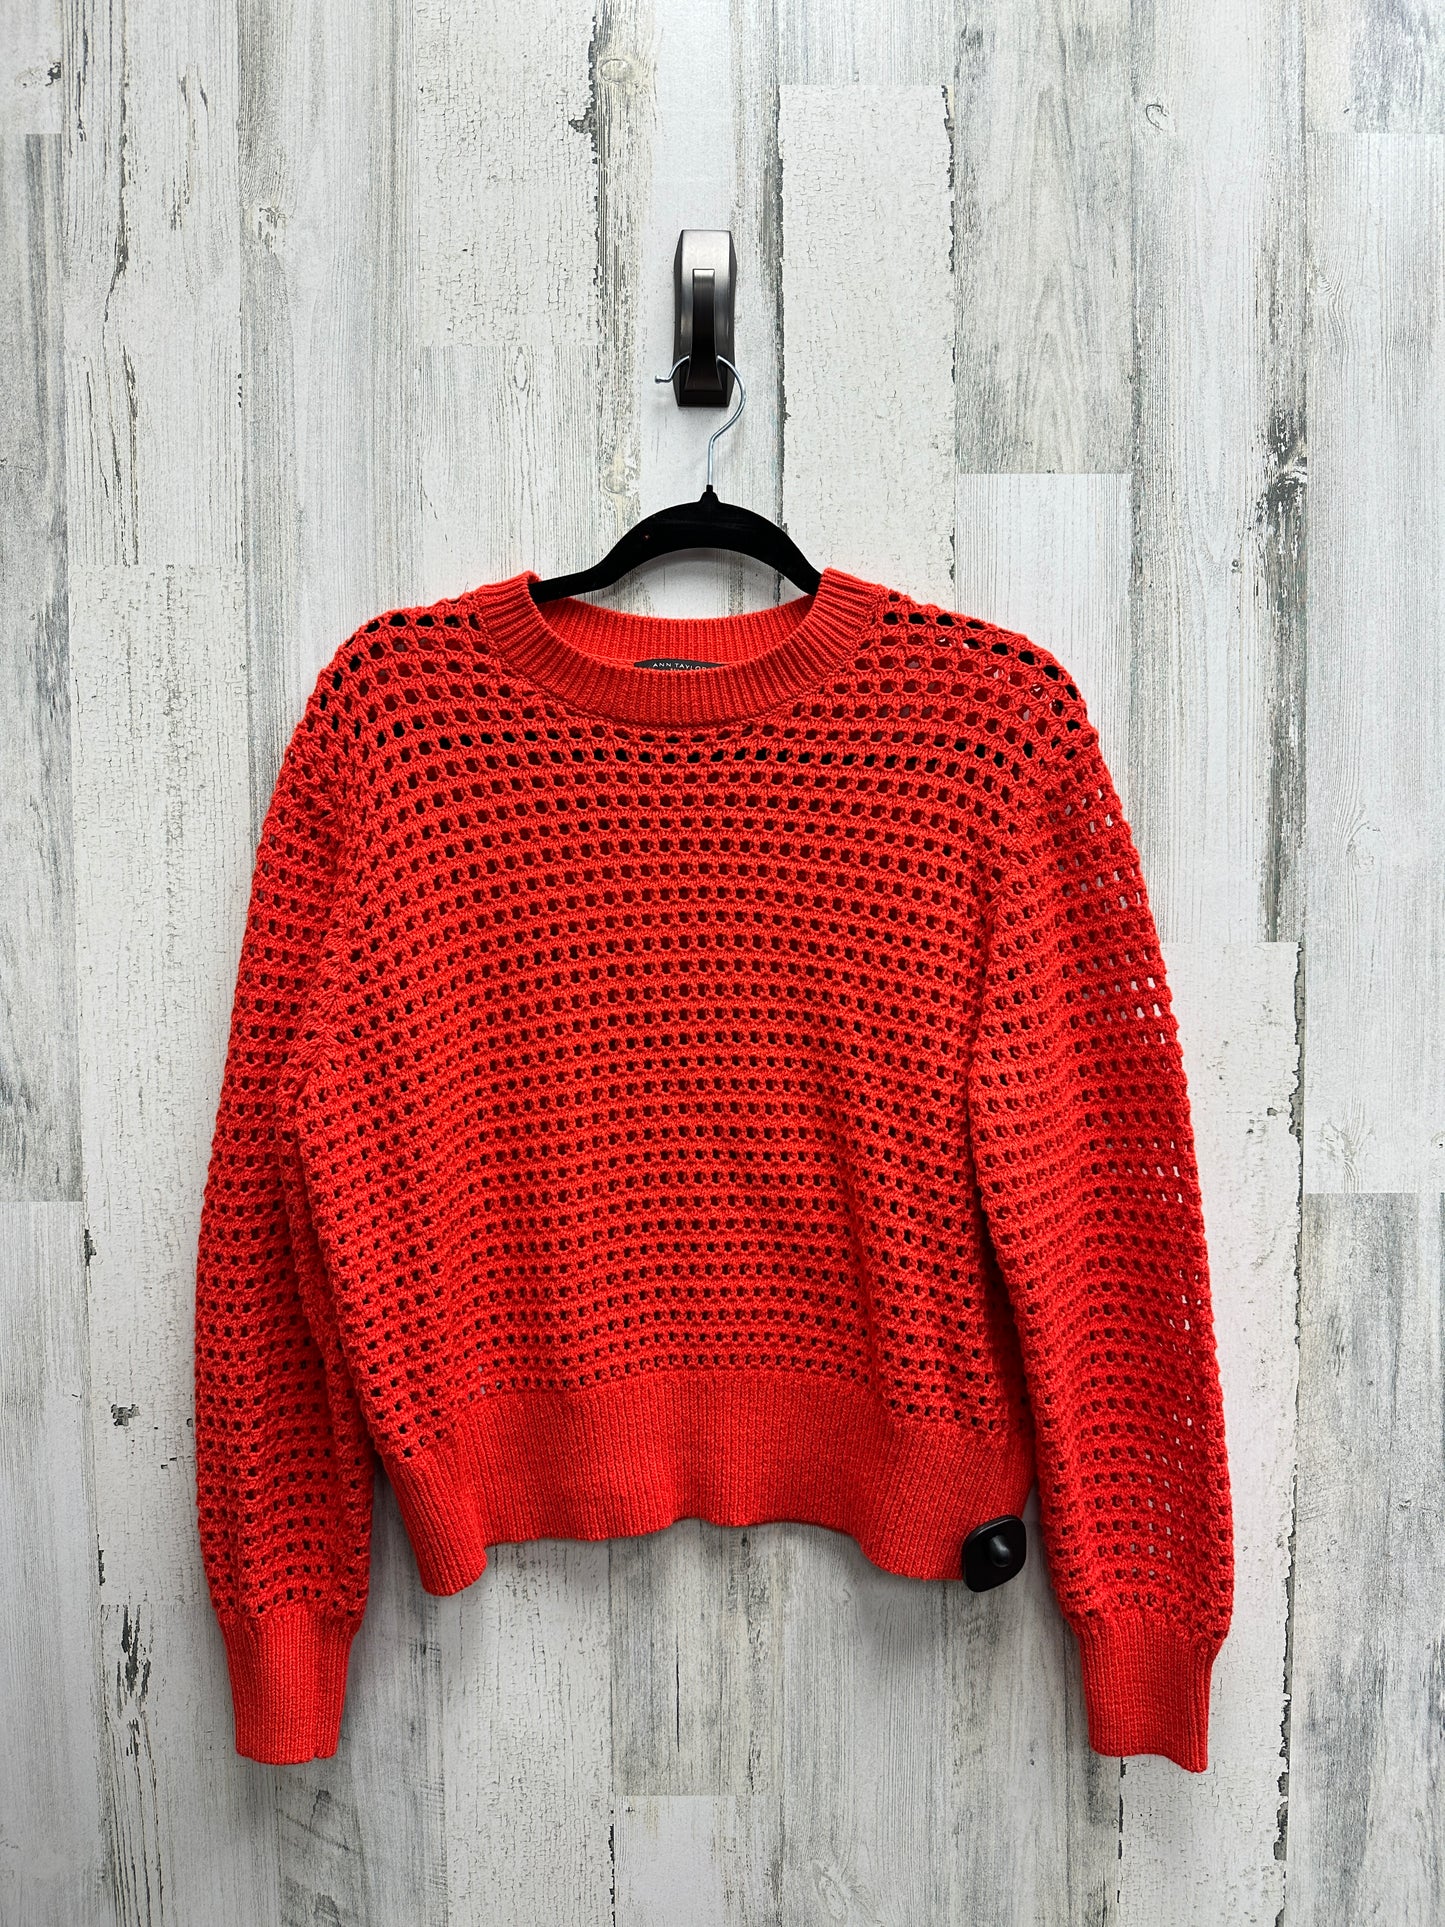 Sweater By Ann Taylor  Size: Petite  Medium